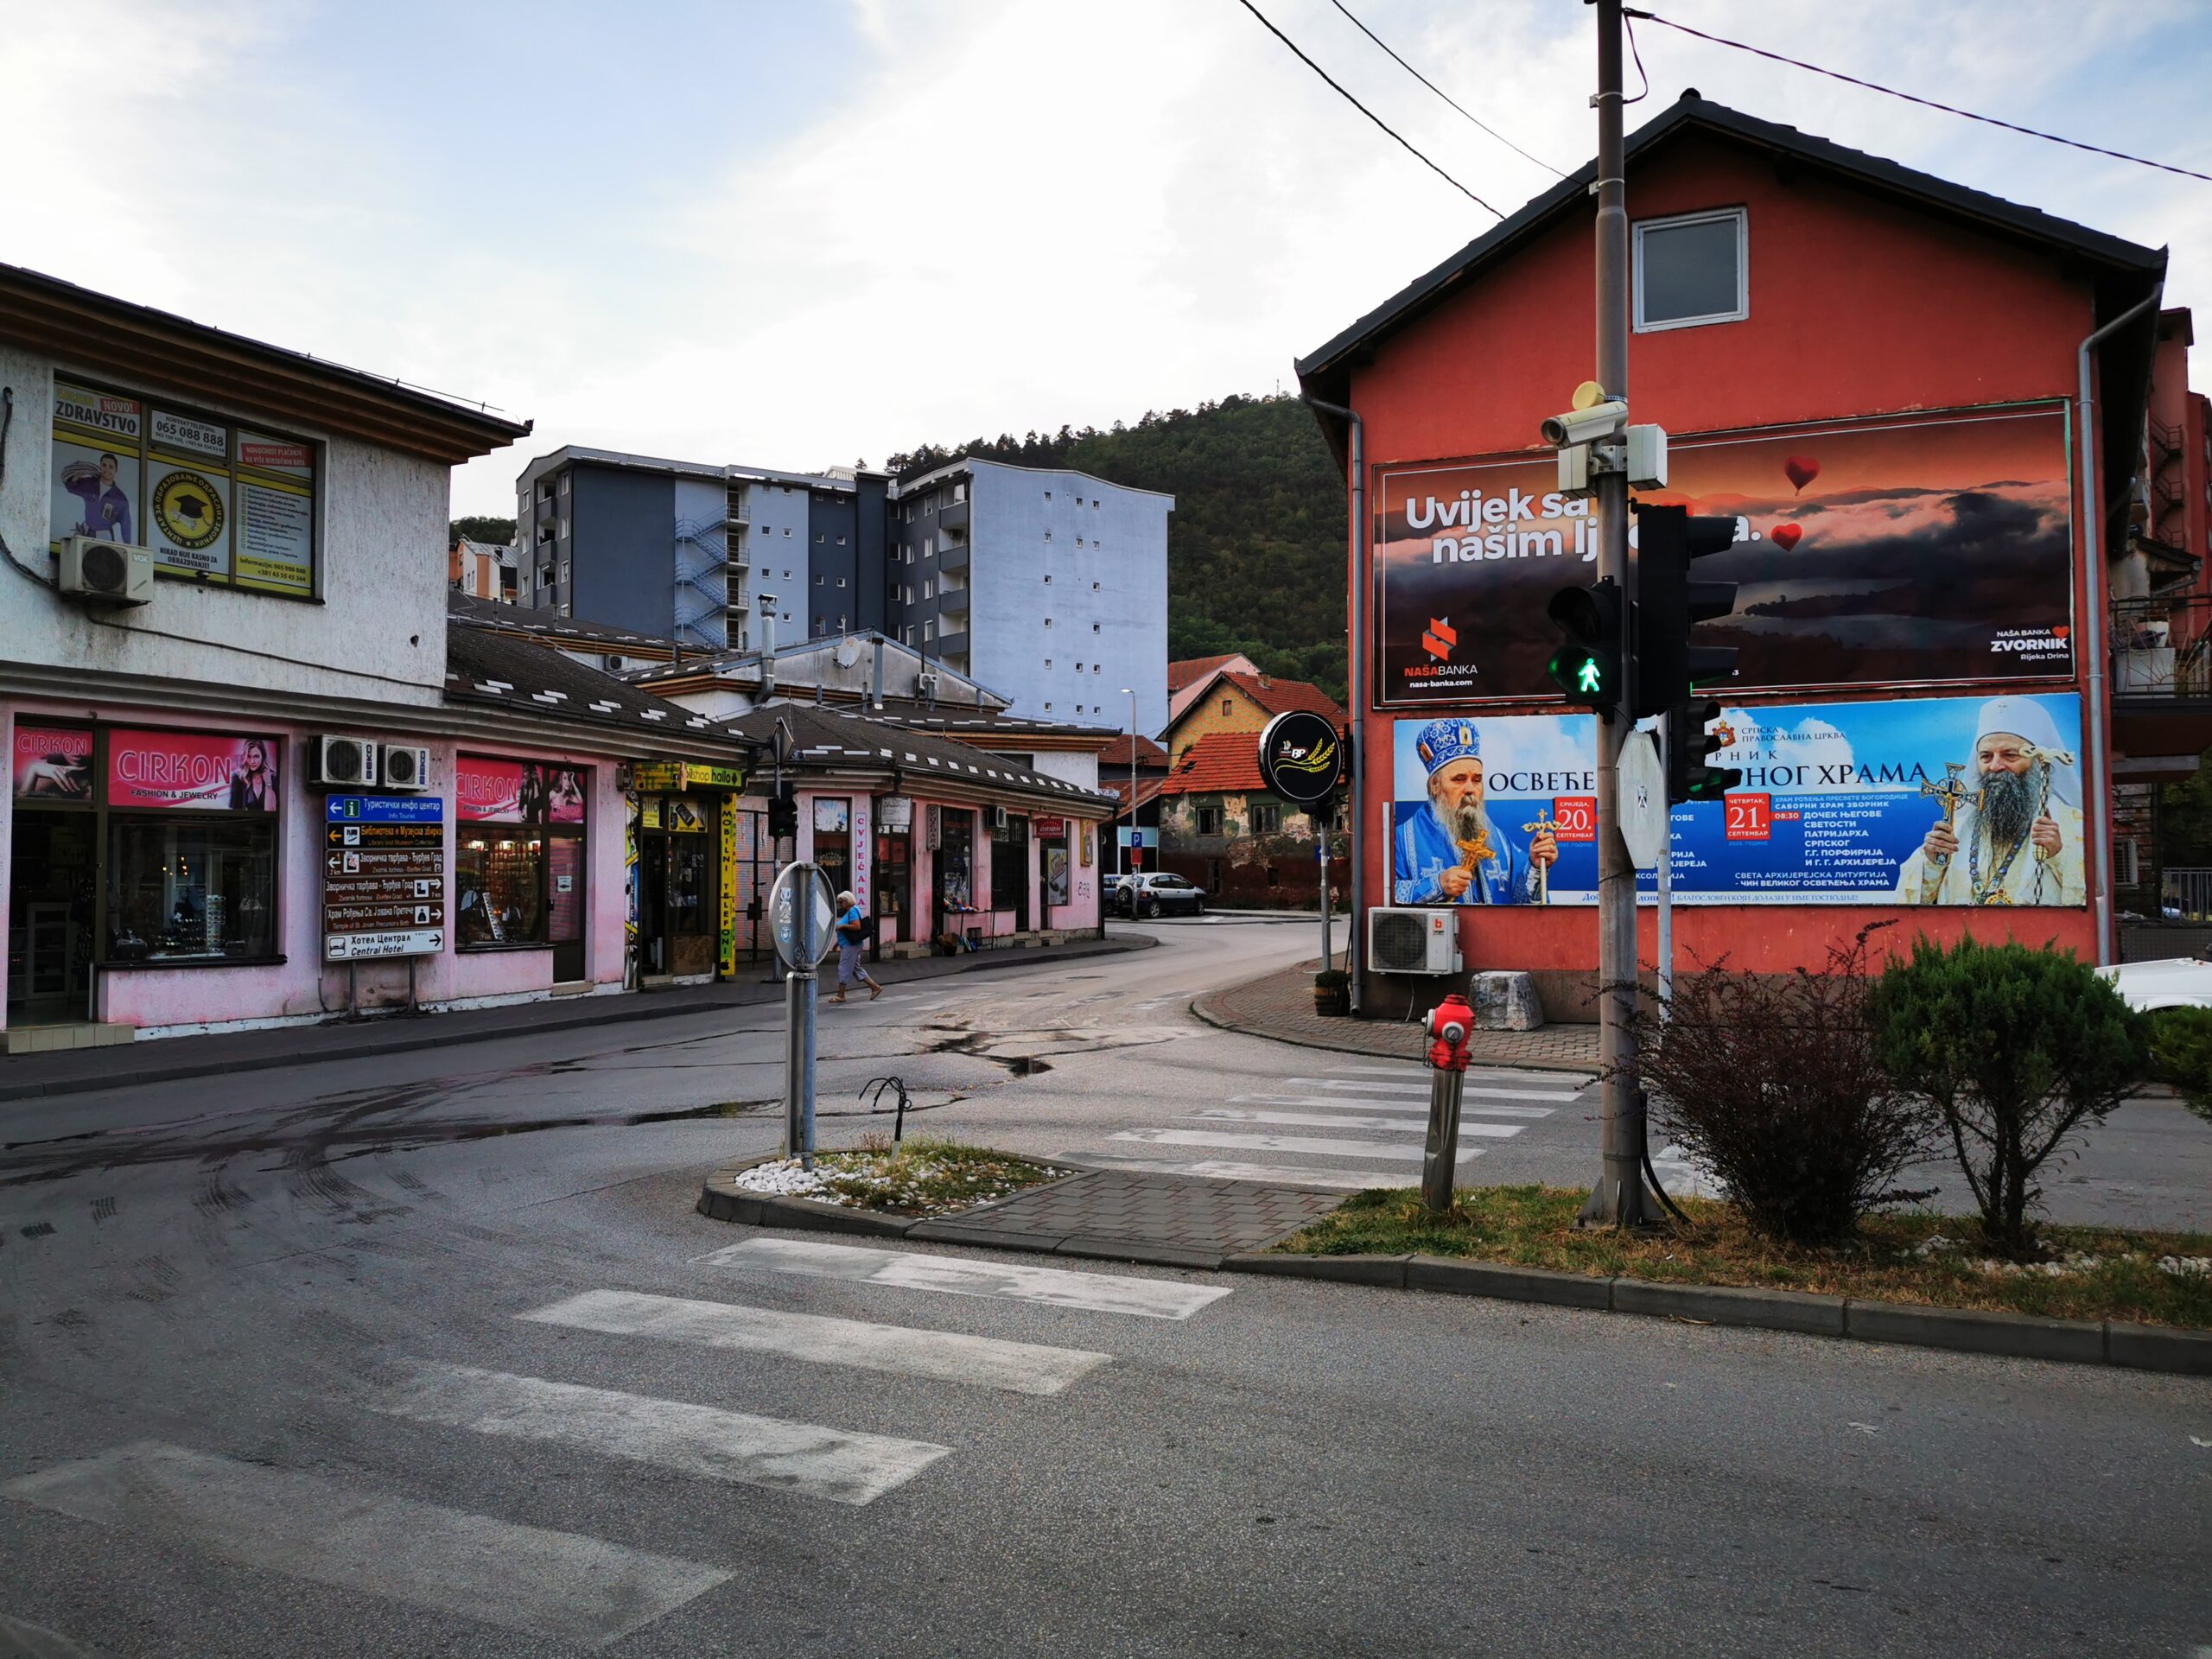 Zvornik, Bosnia